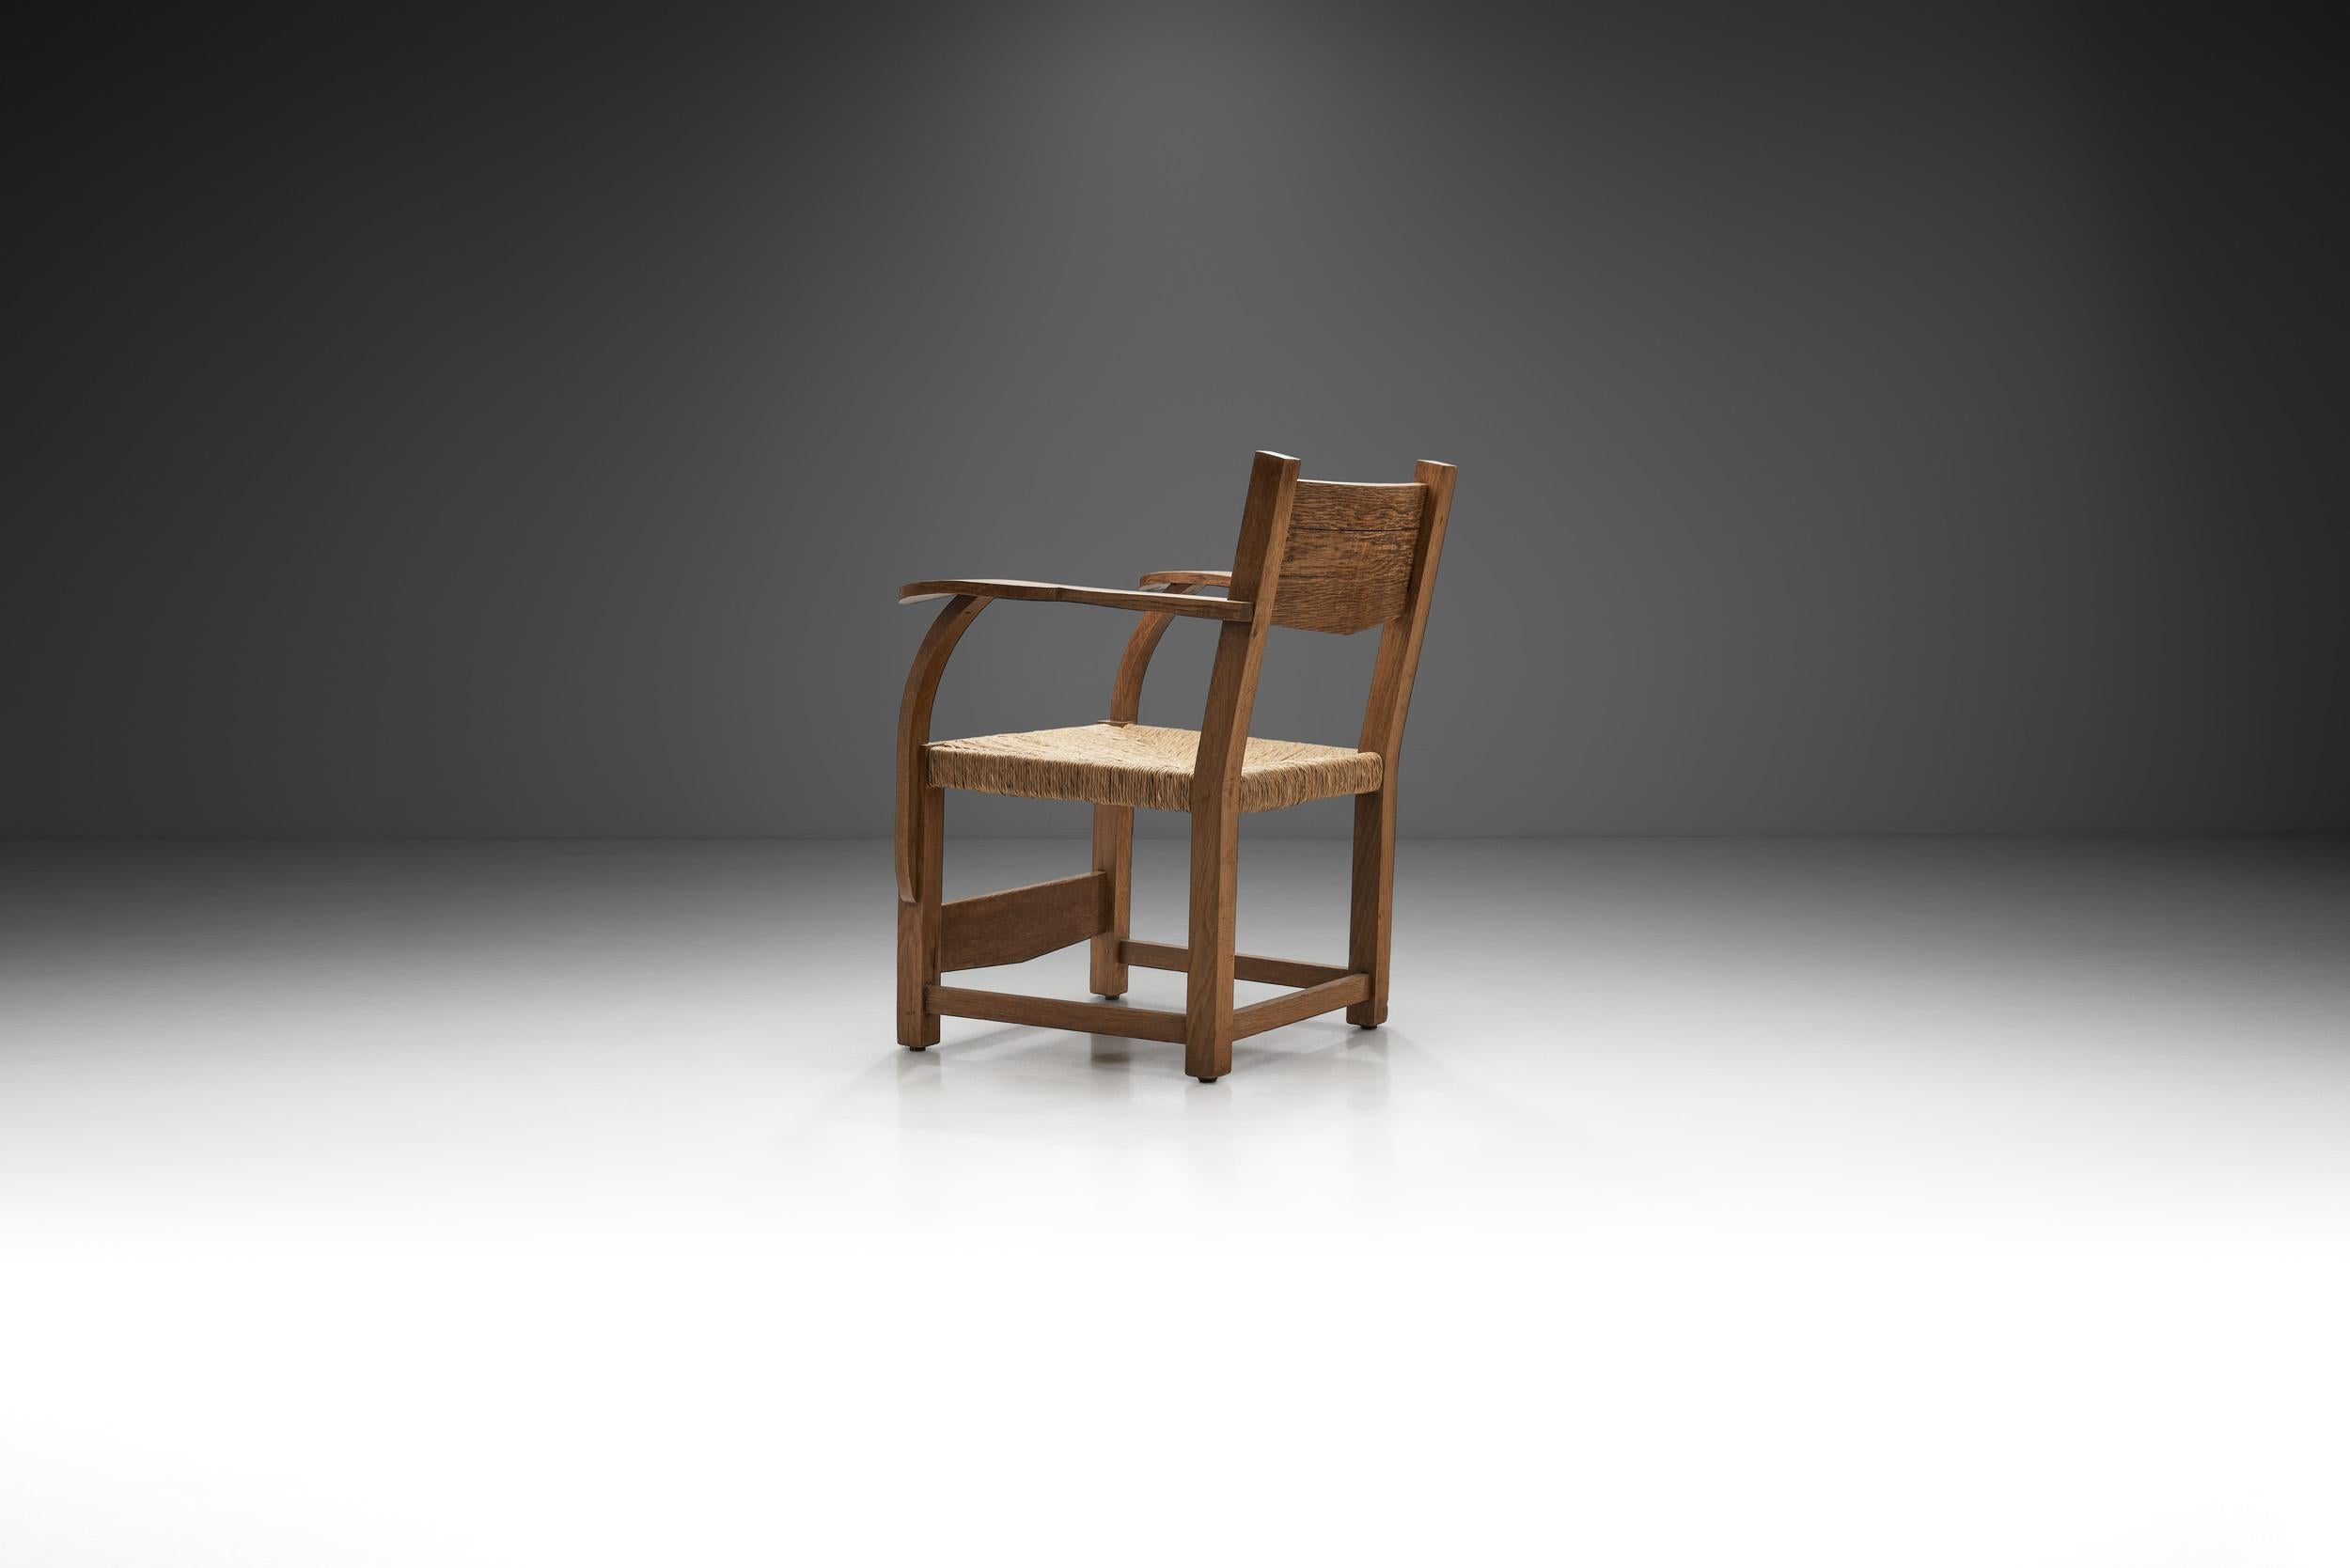 Scandinavian Modern Oak Side Chair with Paper Cord Seat by a Danish Cabinetmaker, Denmark ca 1950s